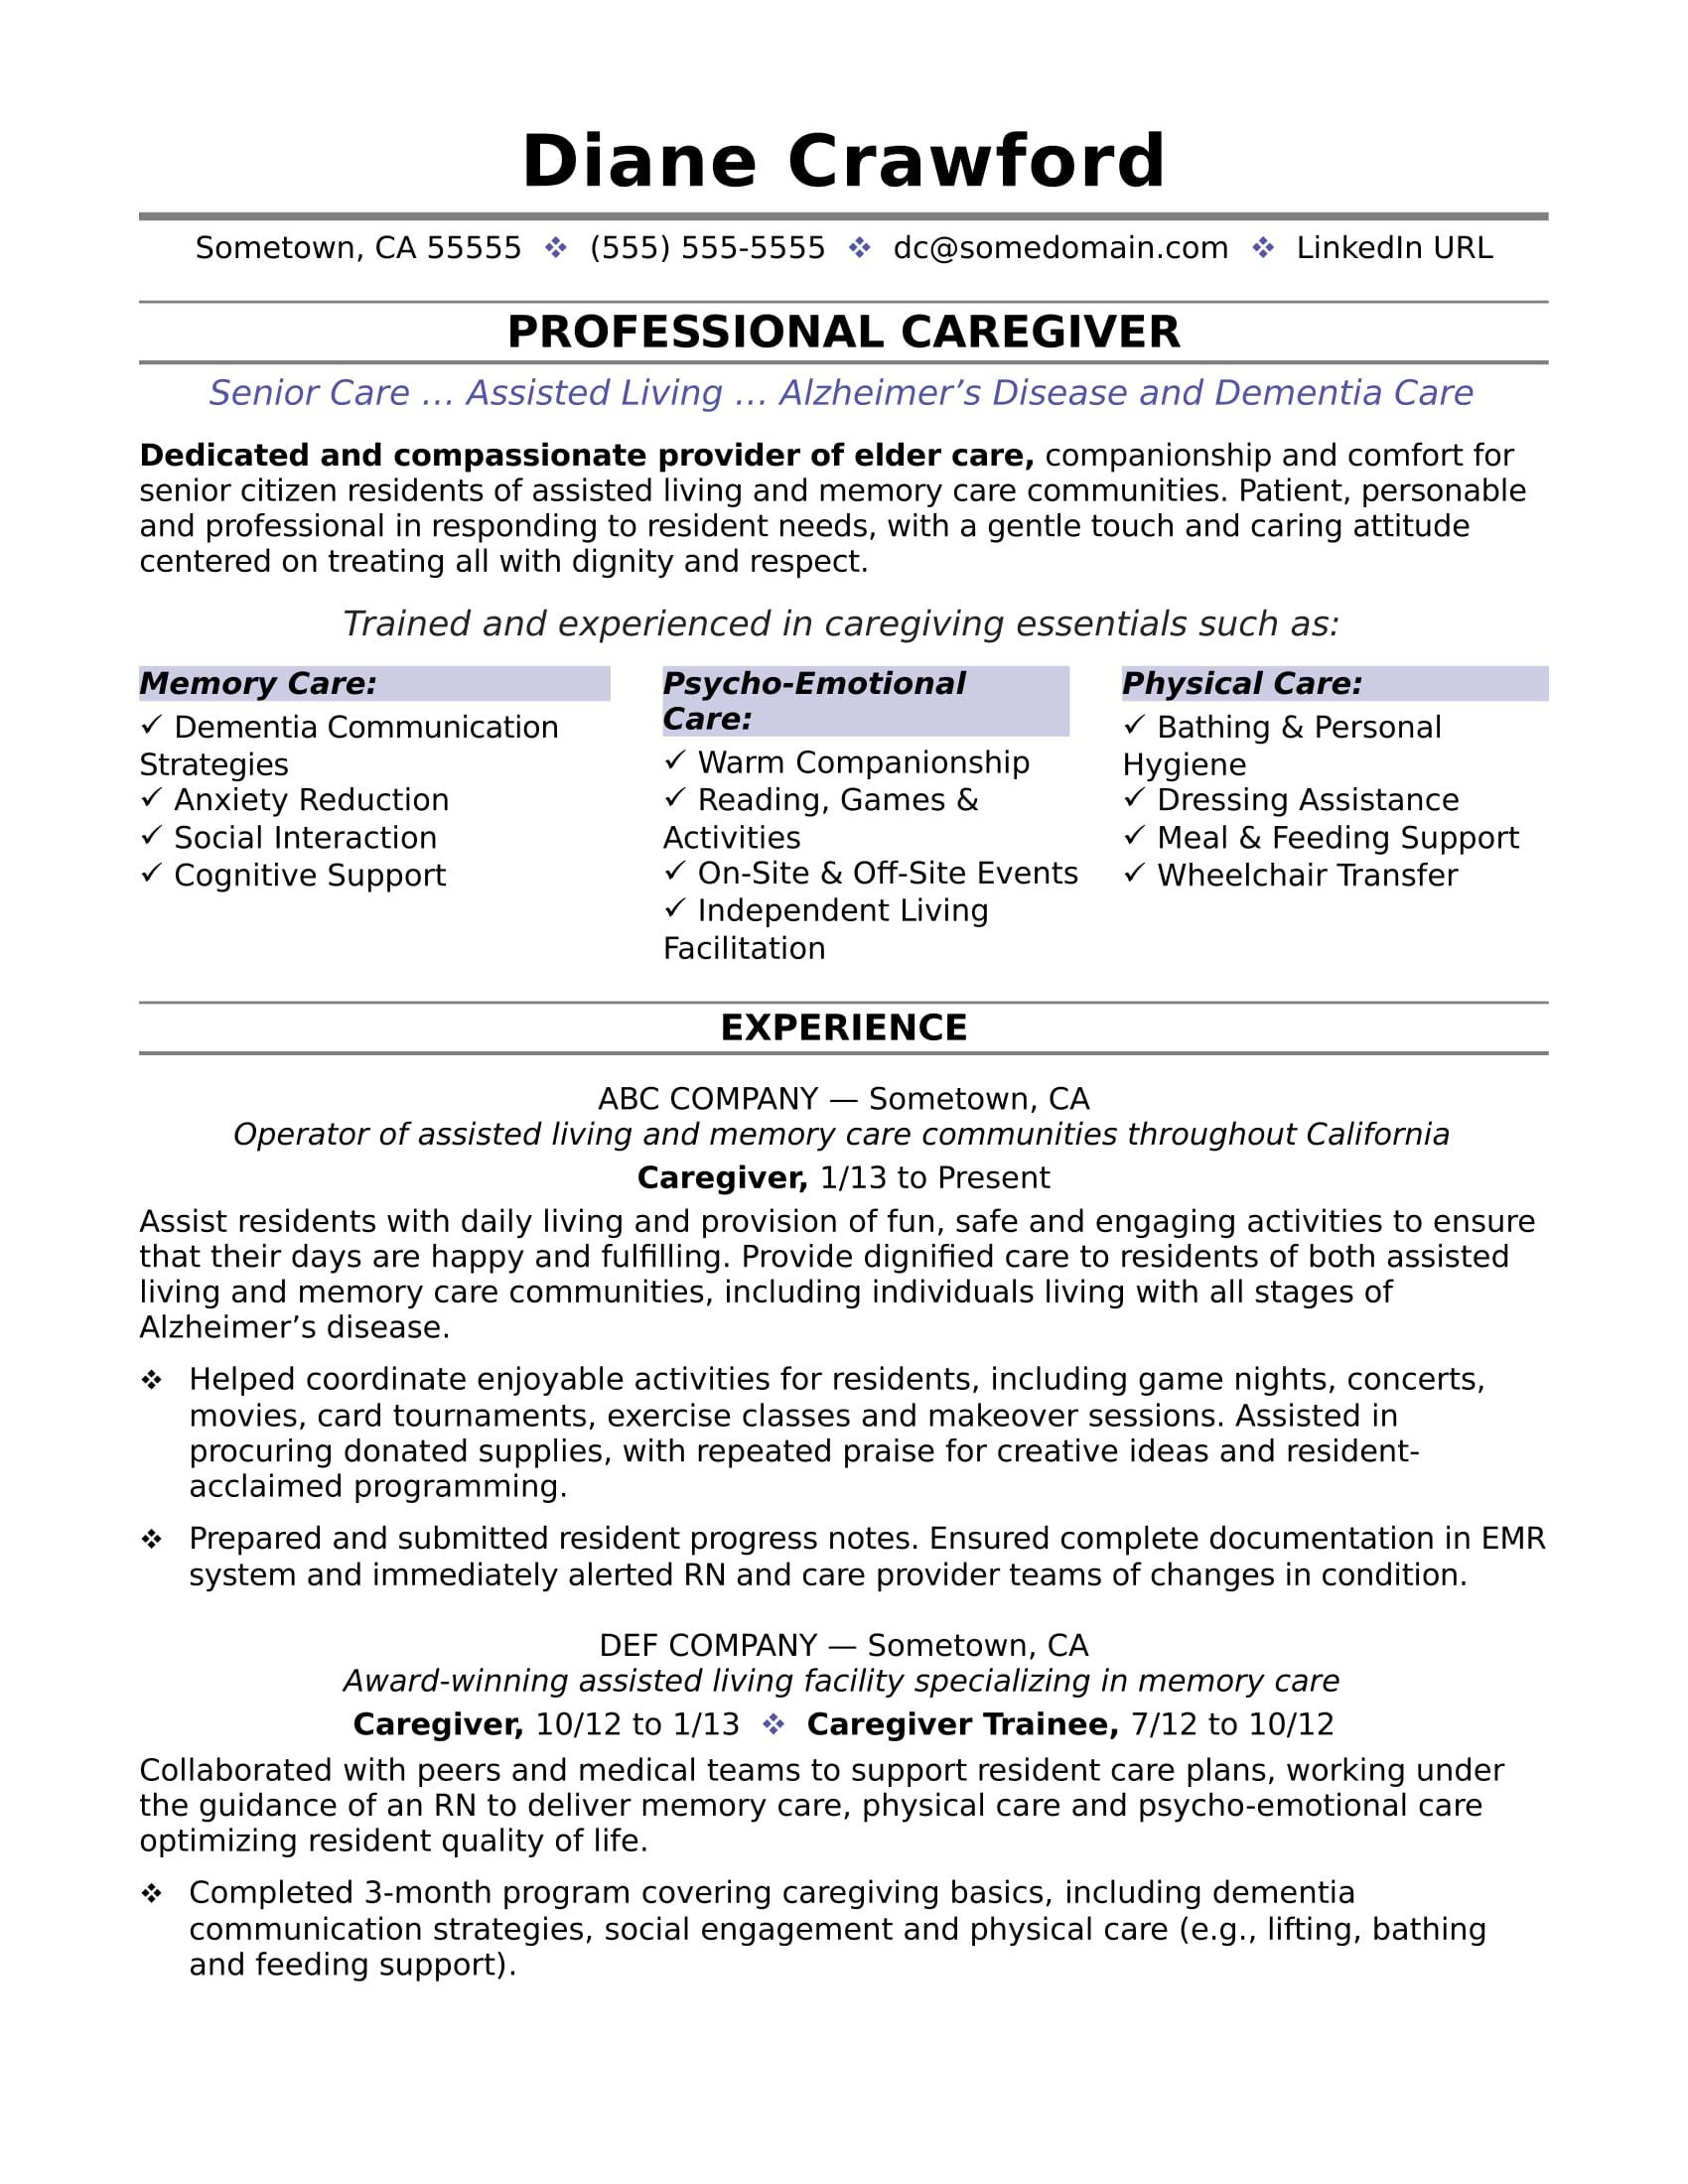 Sample Resume for Personal Care Provider Caregiver Resume Sample Monster.com